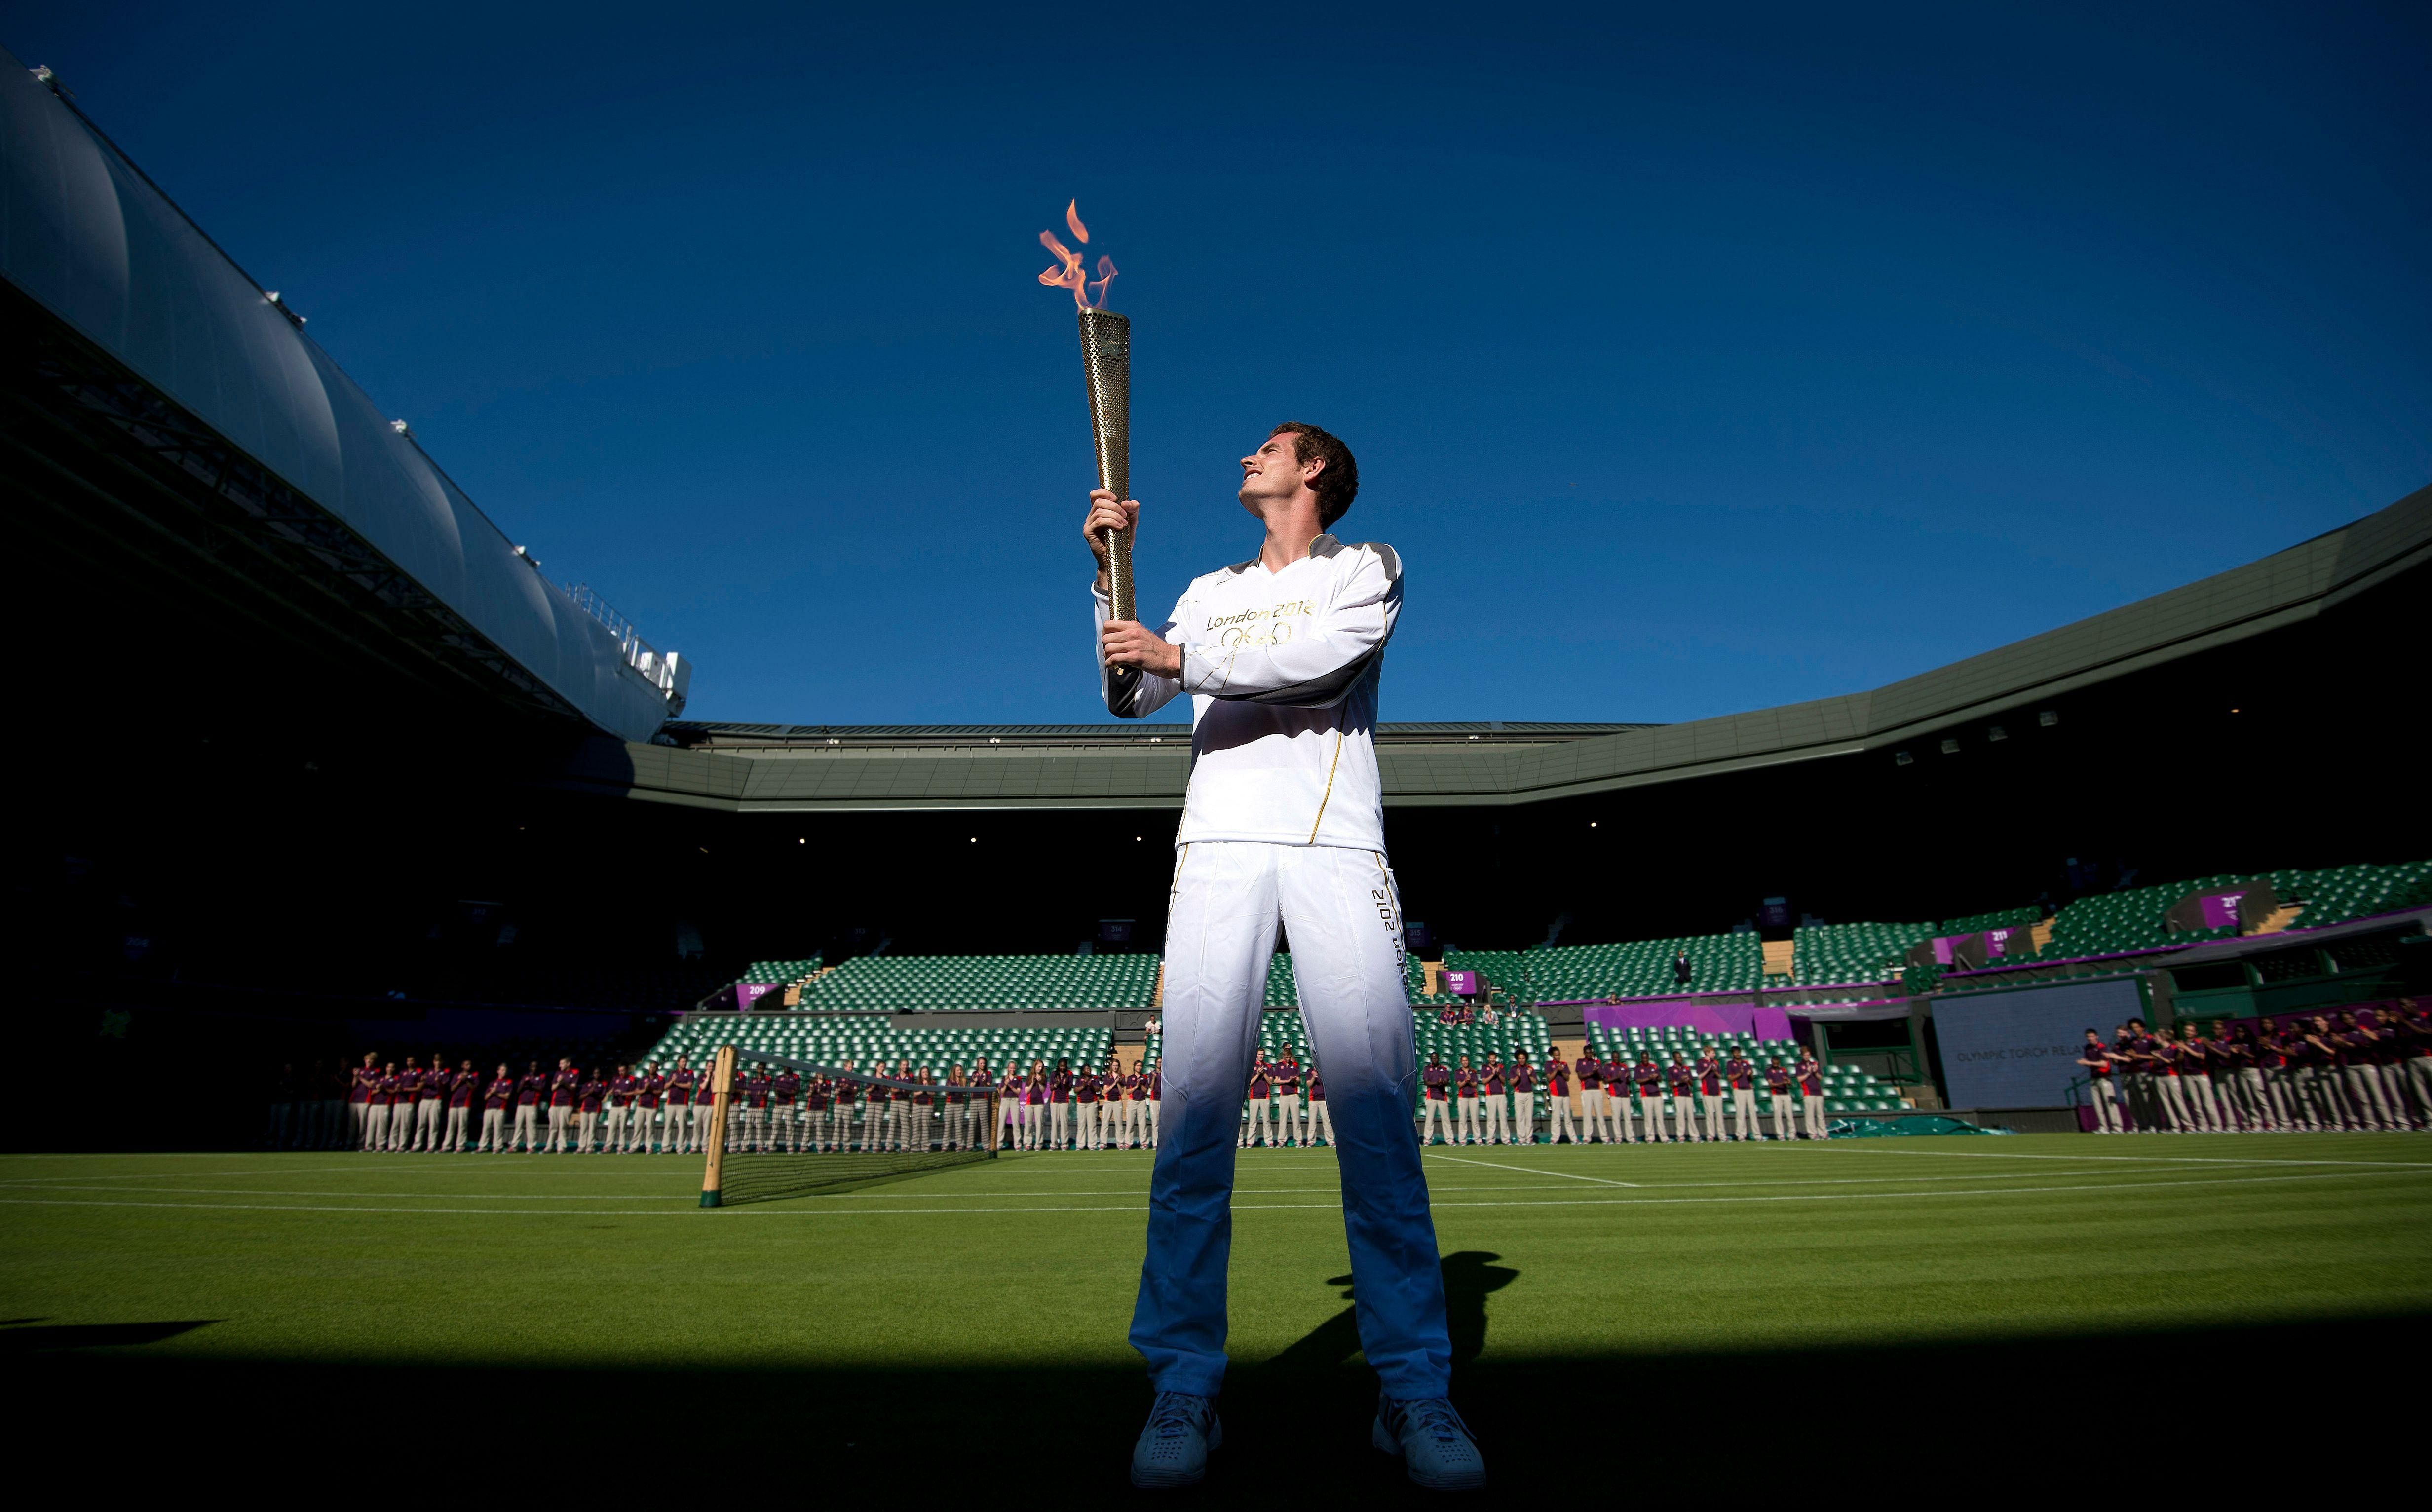 Andy Murray keen to play Paris Olympics despite retirement talk